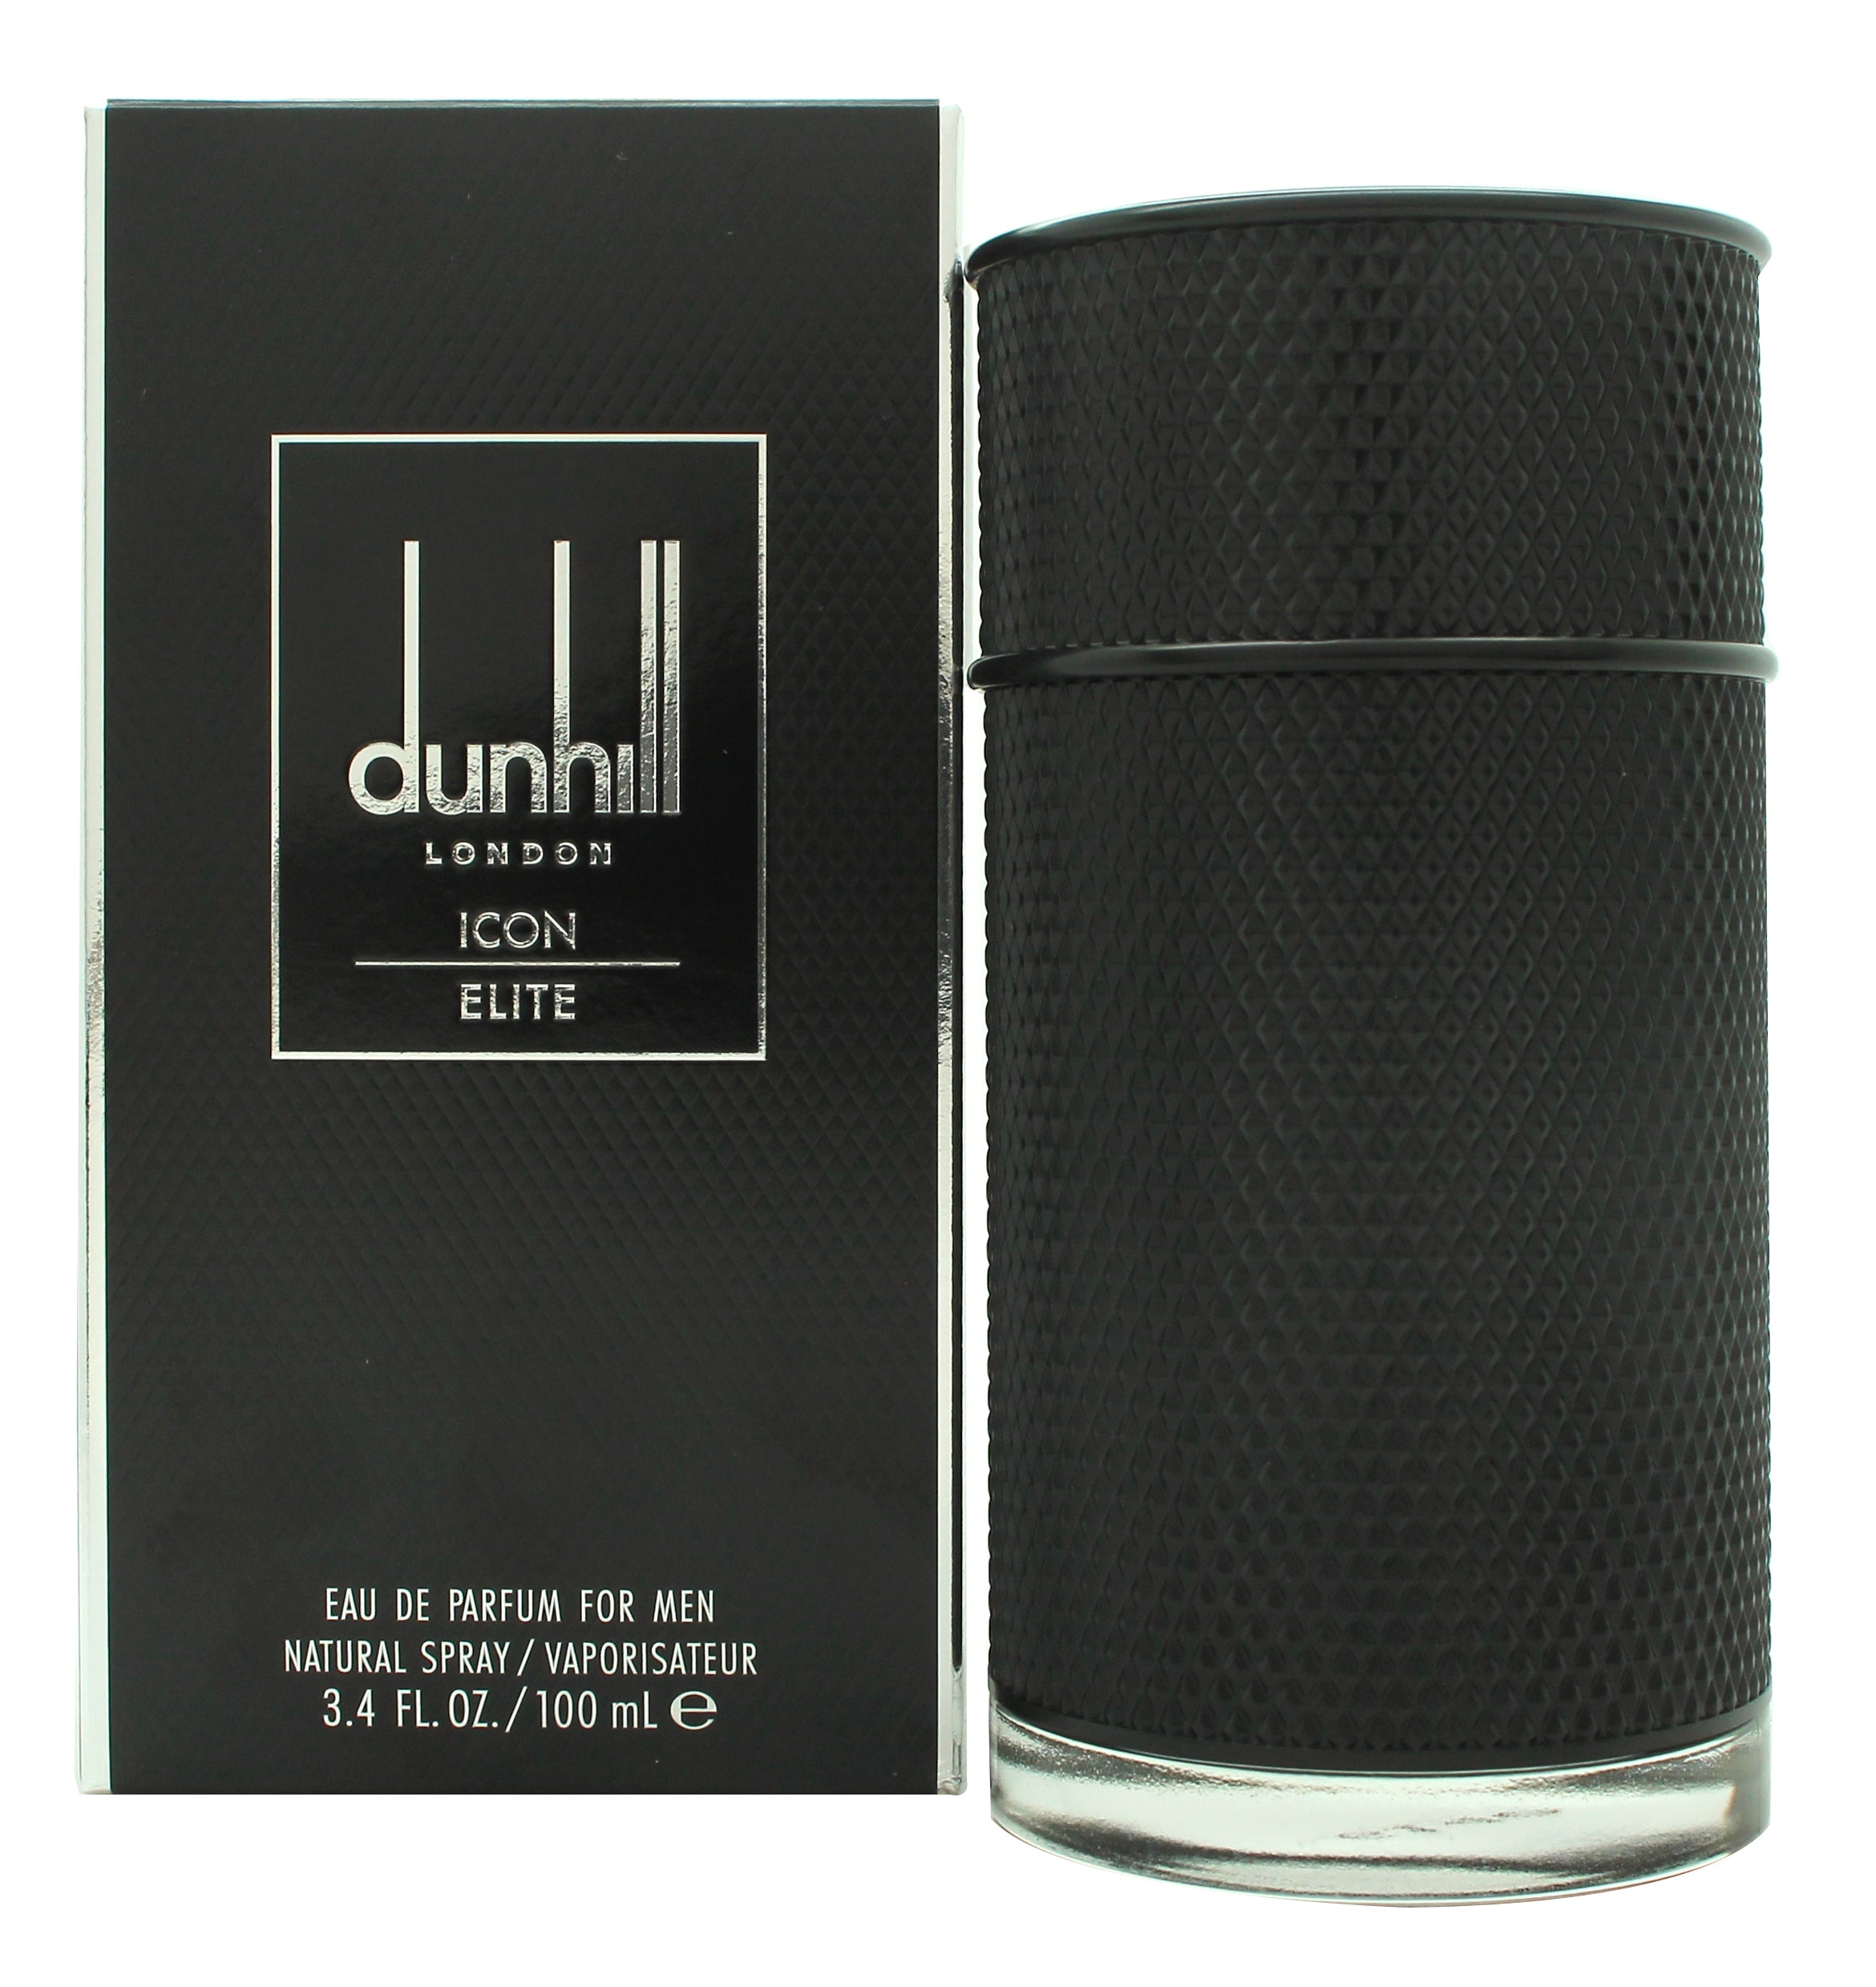 View Dunhill Icon Elite Eau de Parfum 100ml Spray information